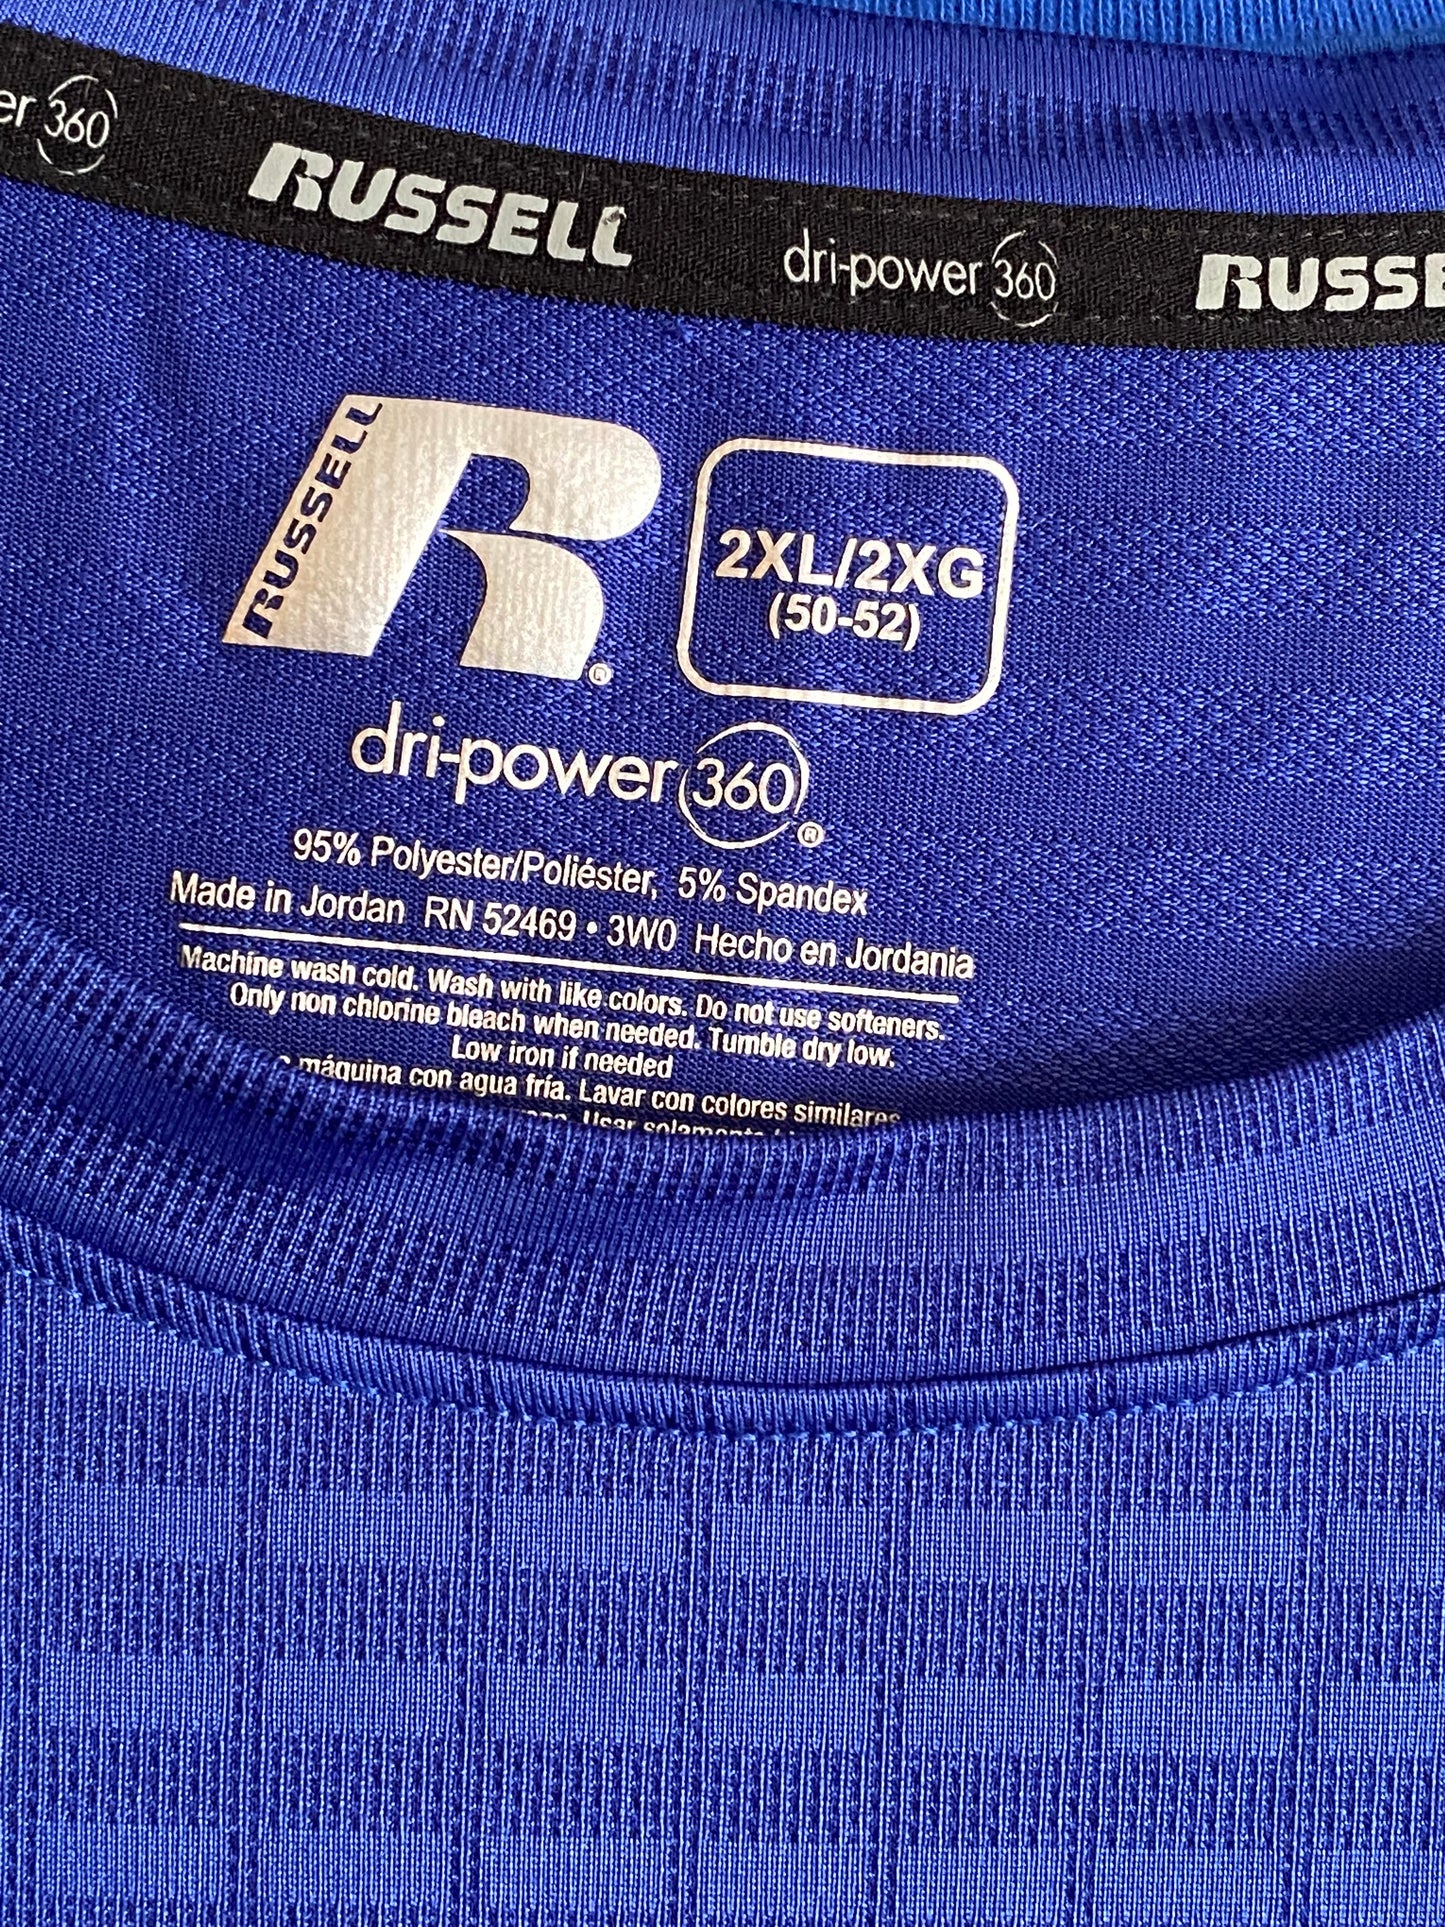 Russell Dri-Power 360 Active Fashion T-Shirt Size 2XL/2XG (50-52) Purple Blue